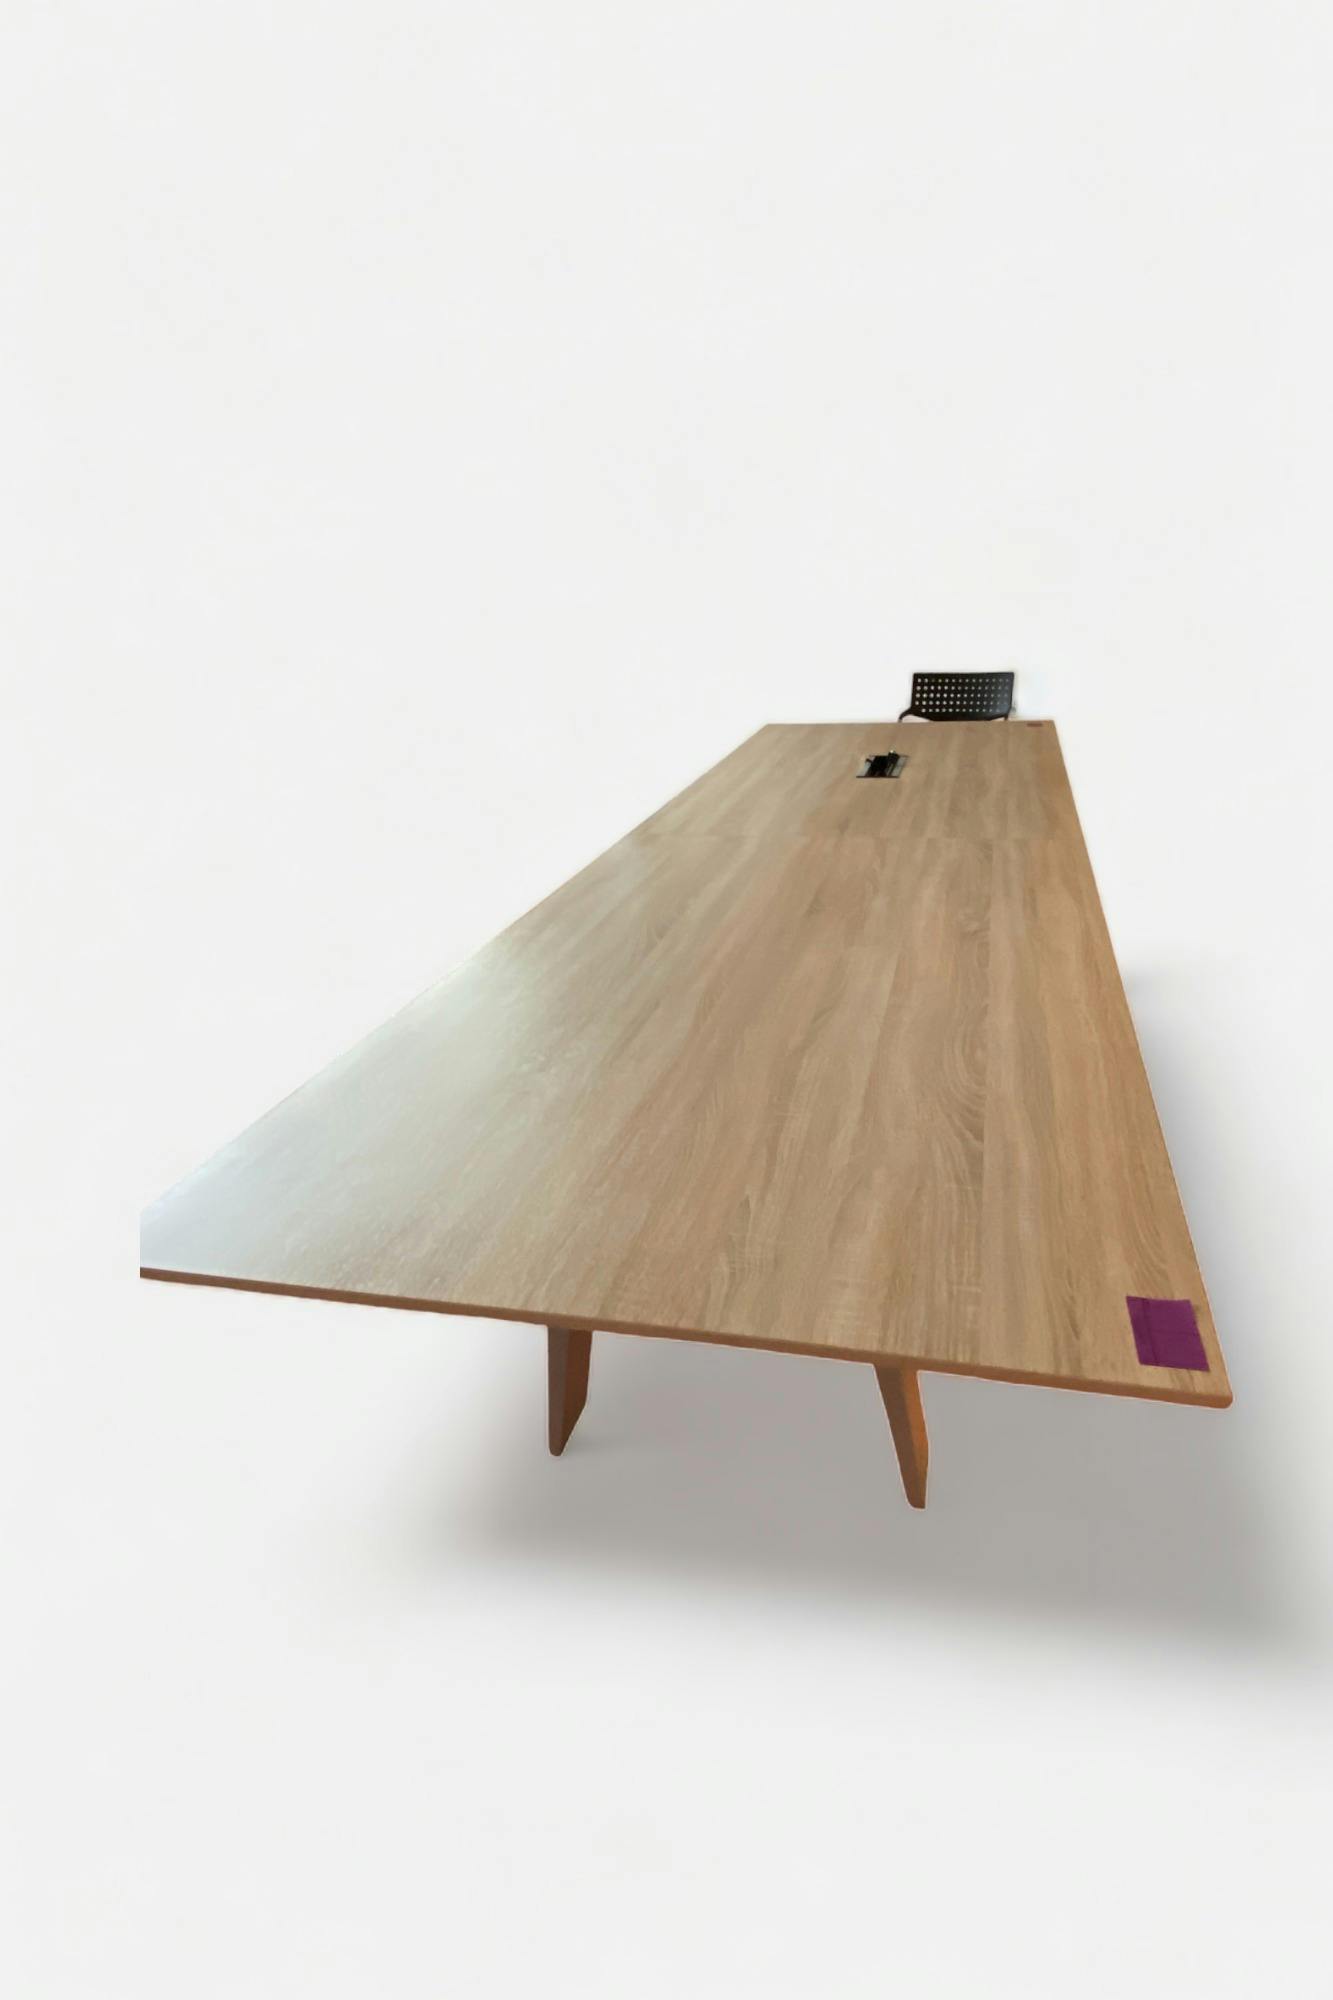 Grote houten vergadertafel - Relieve Furniture